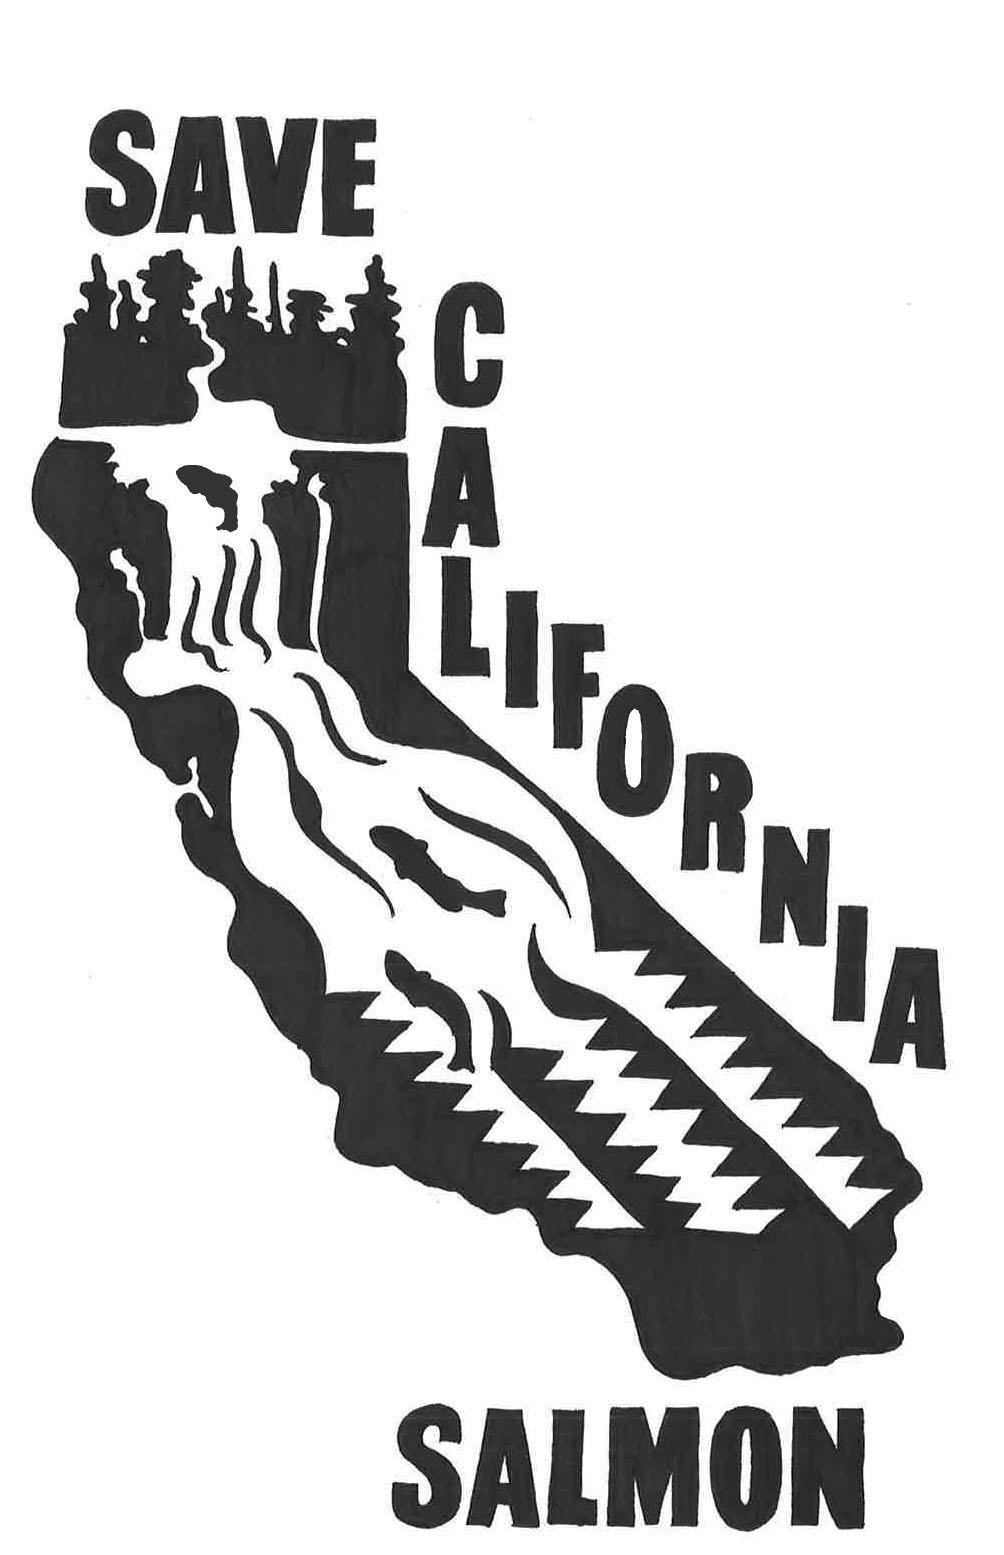 Save California Salmon.jpg